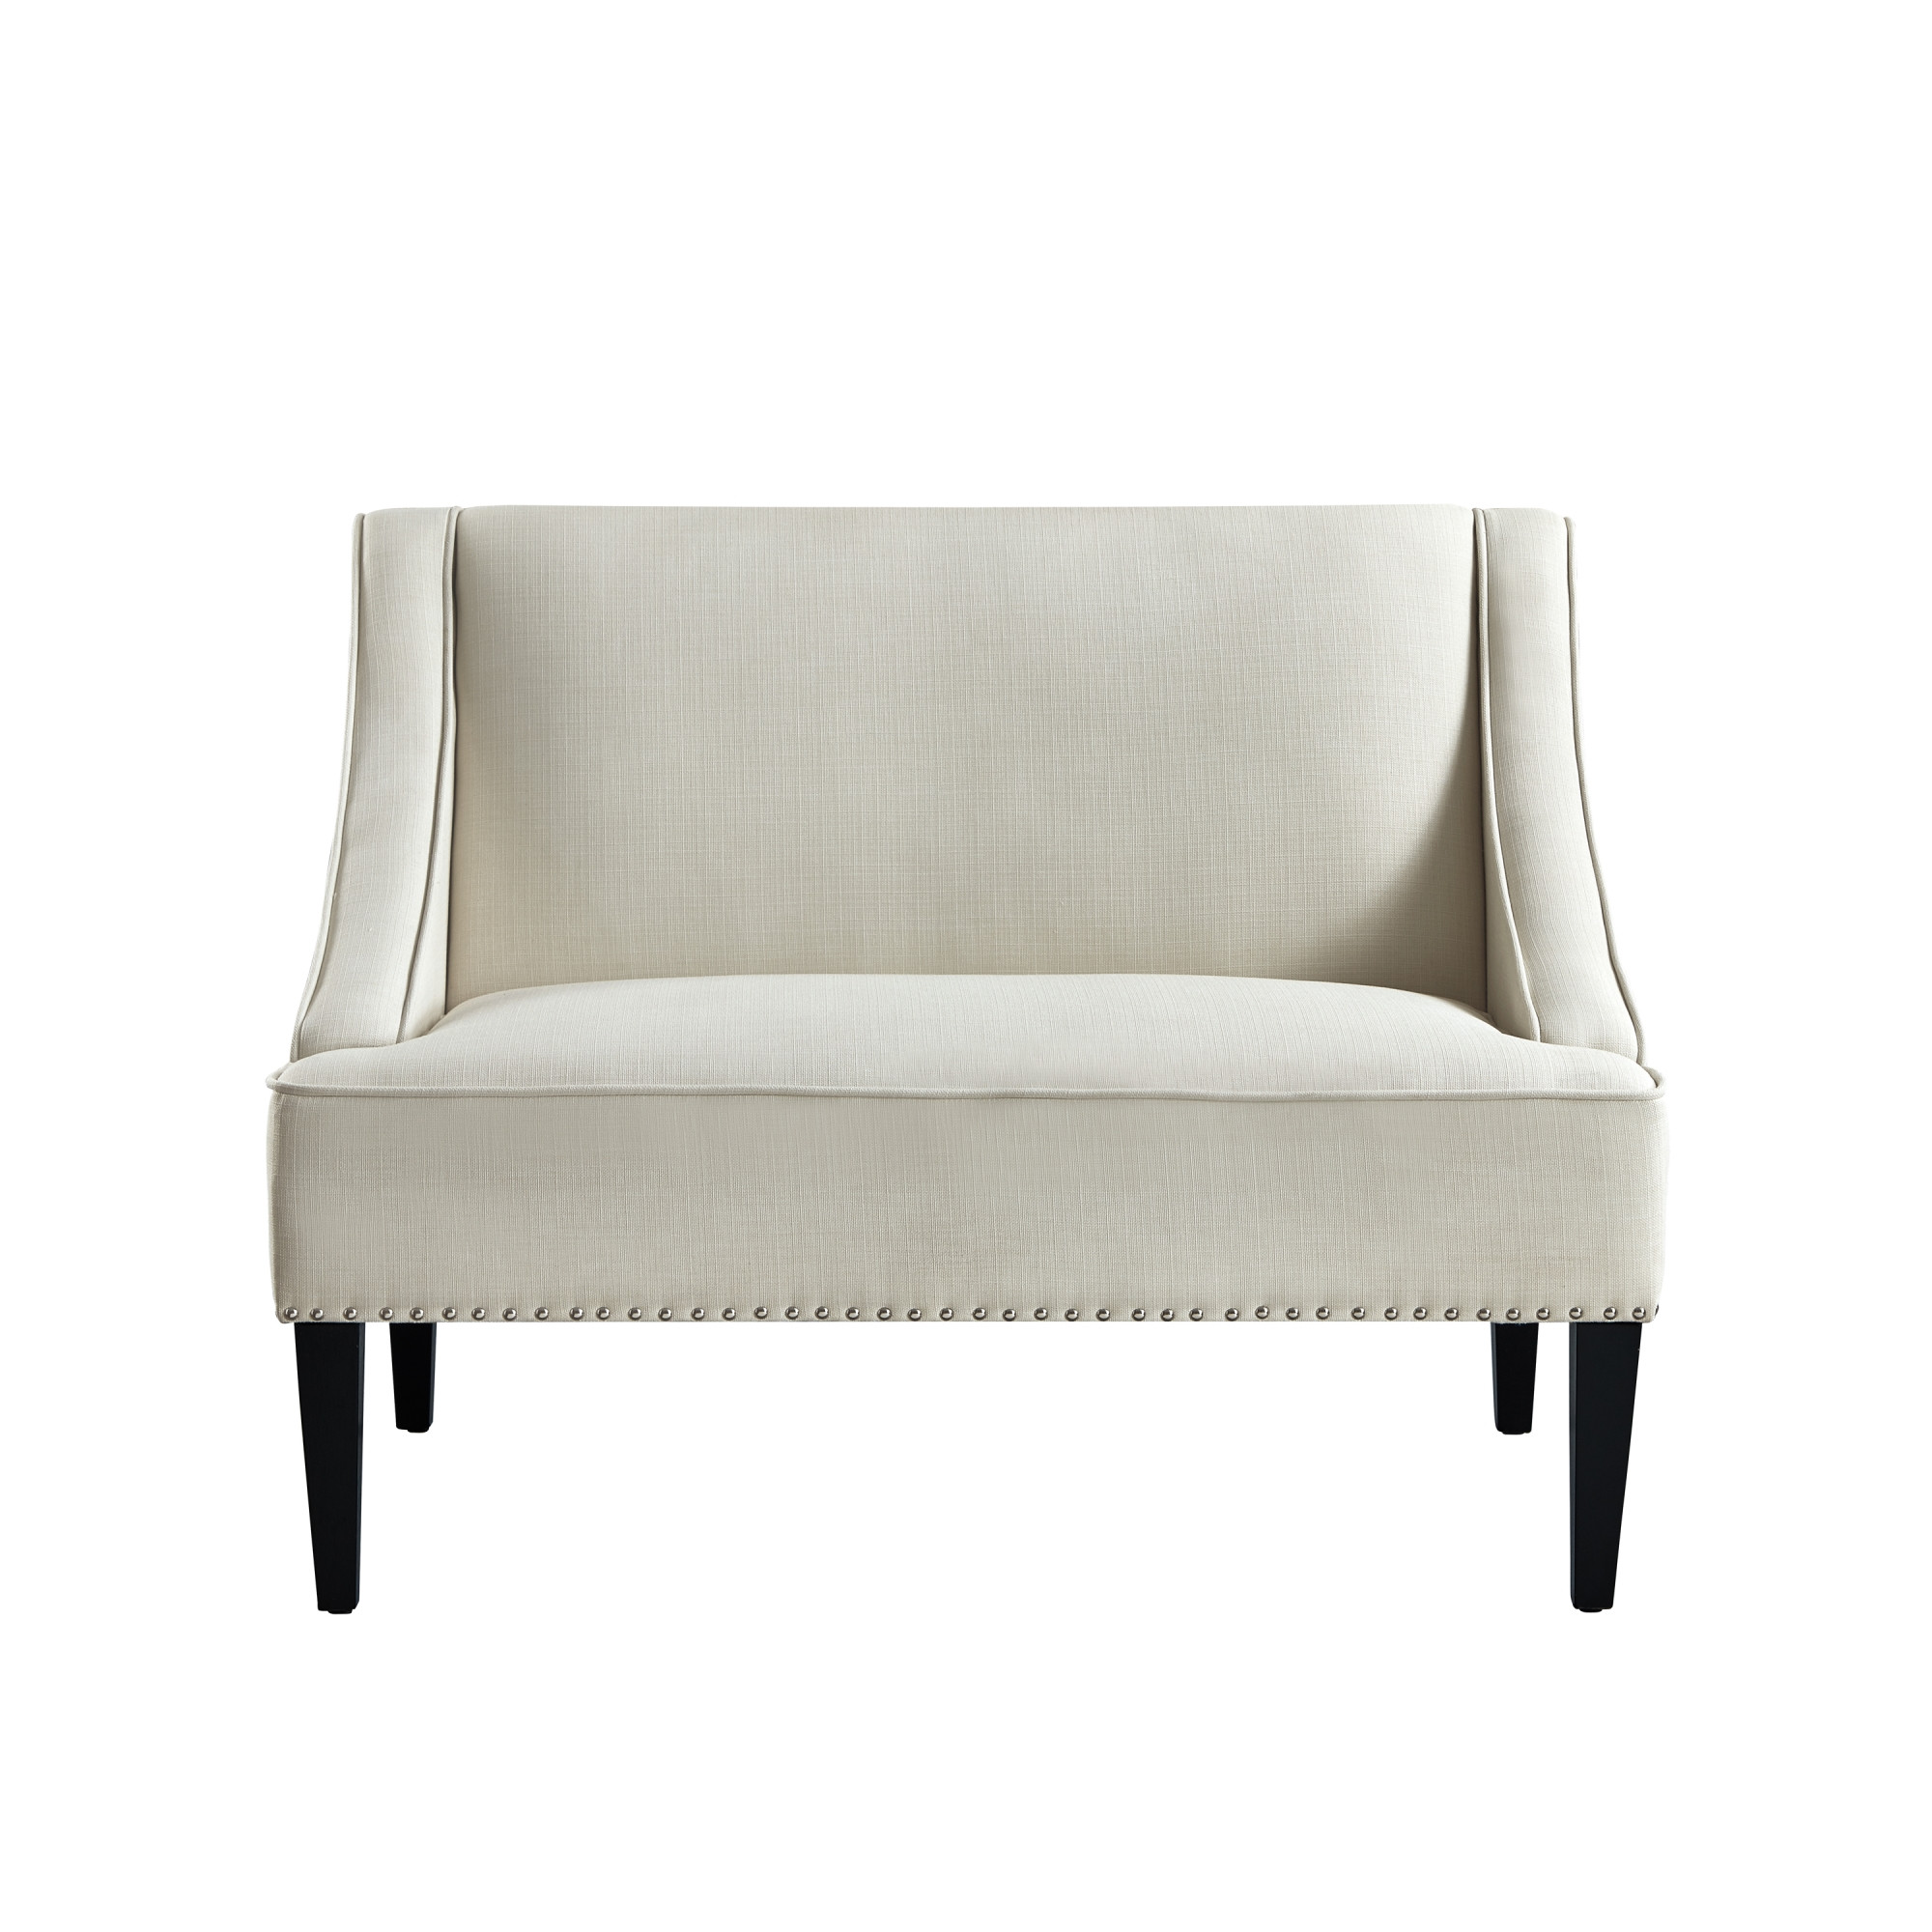 45" Cream And Black Upholstered Linen Bench-490923-1